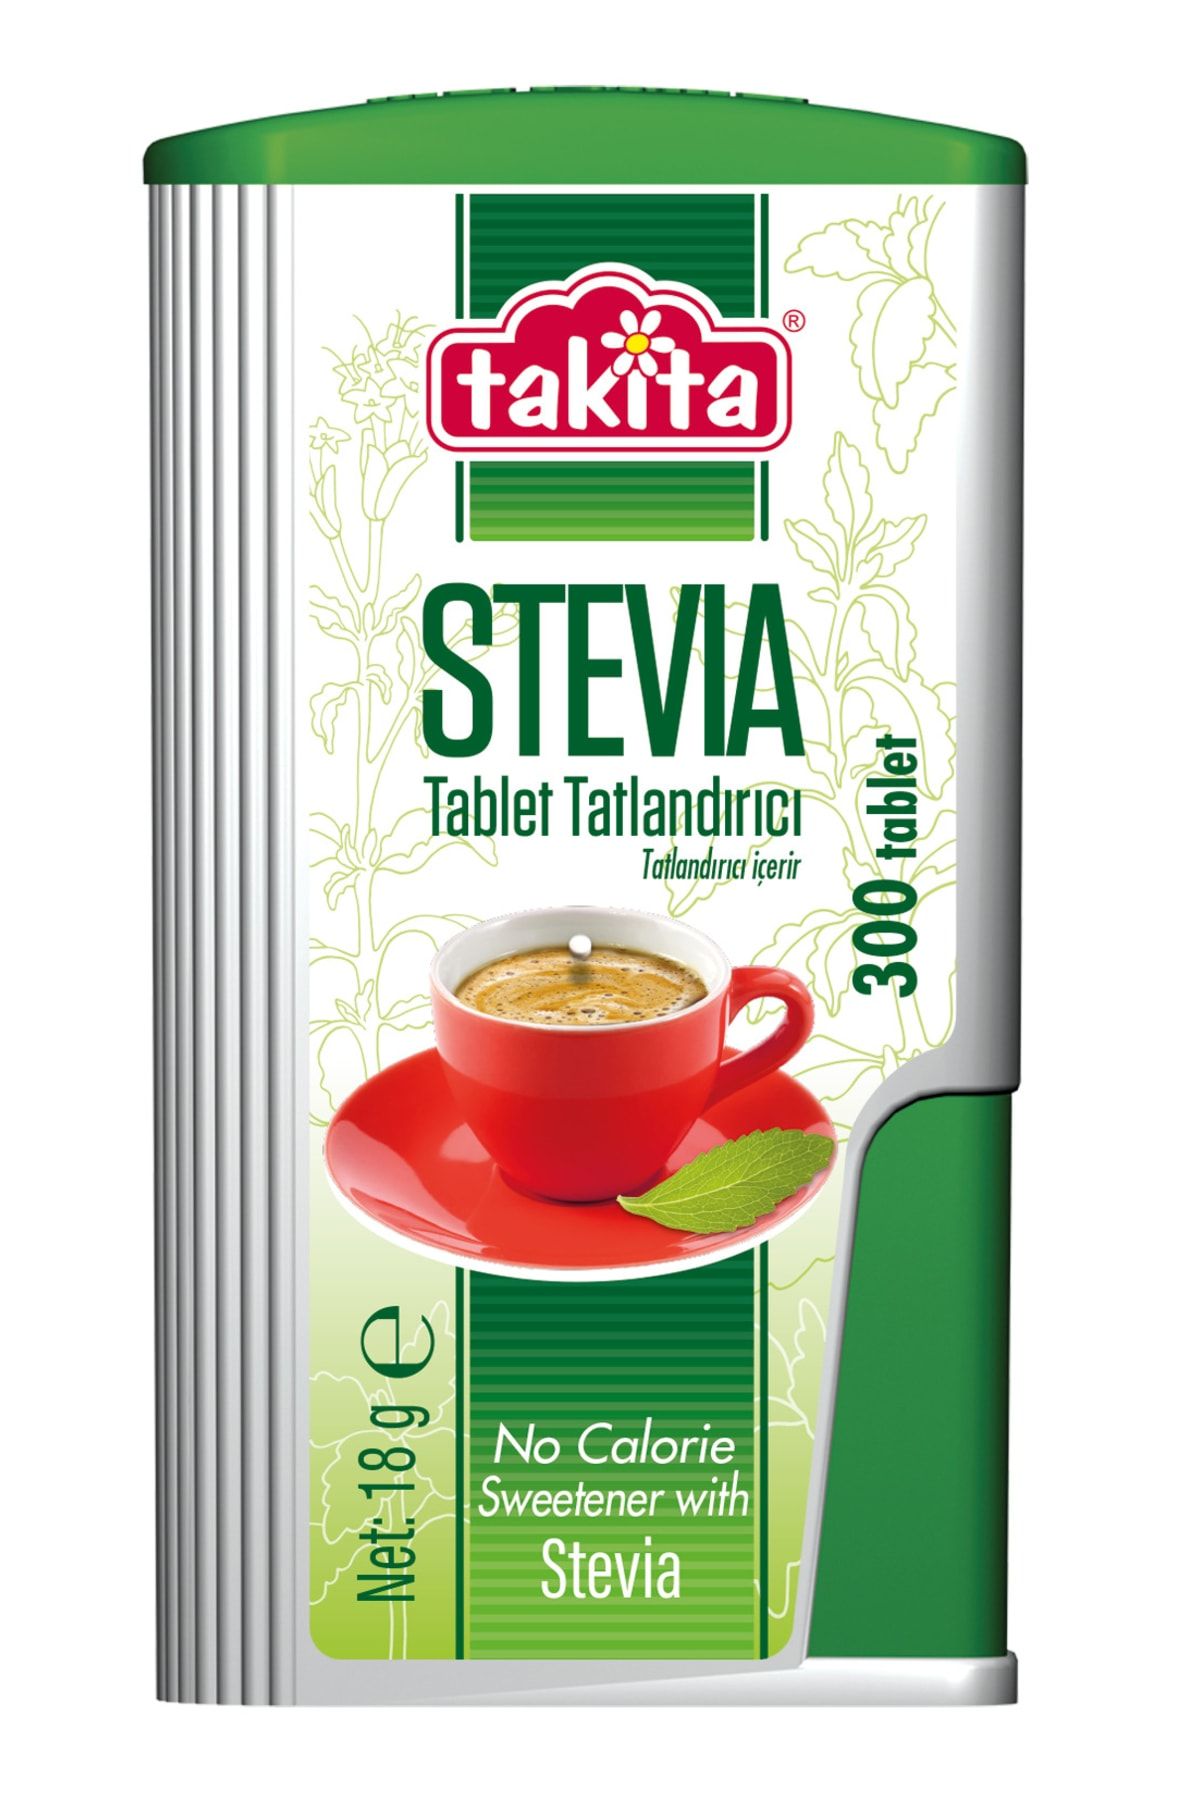 Takita Stevia Tablet Tatlandırıcı 300ad 18g